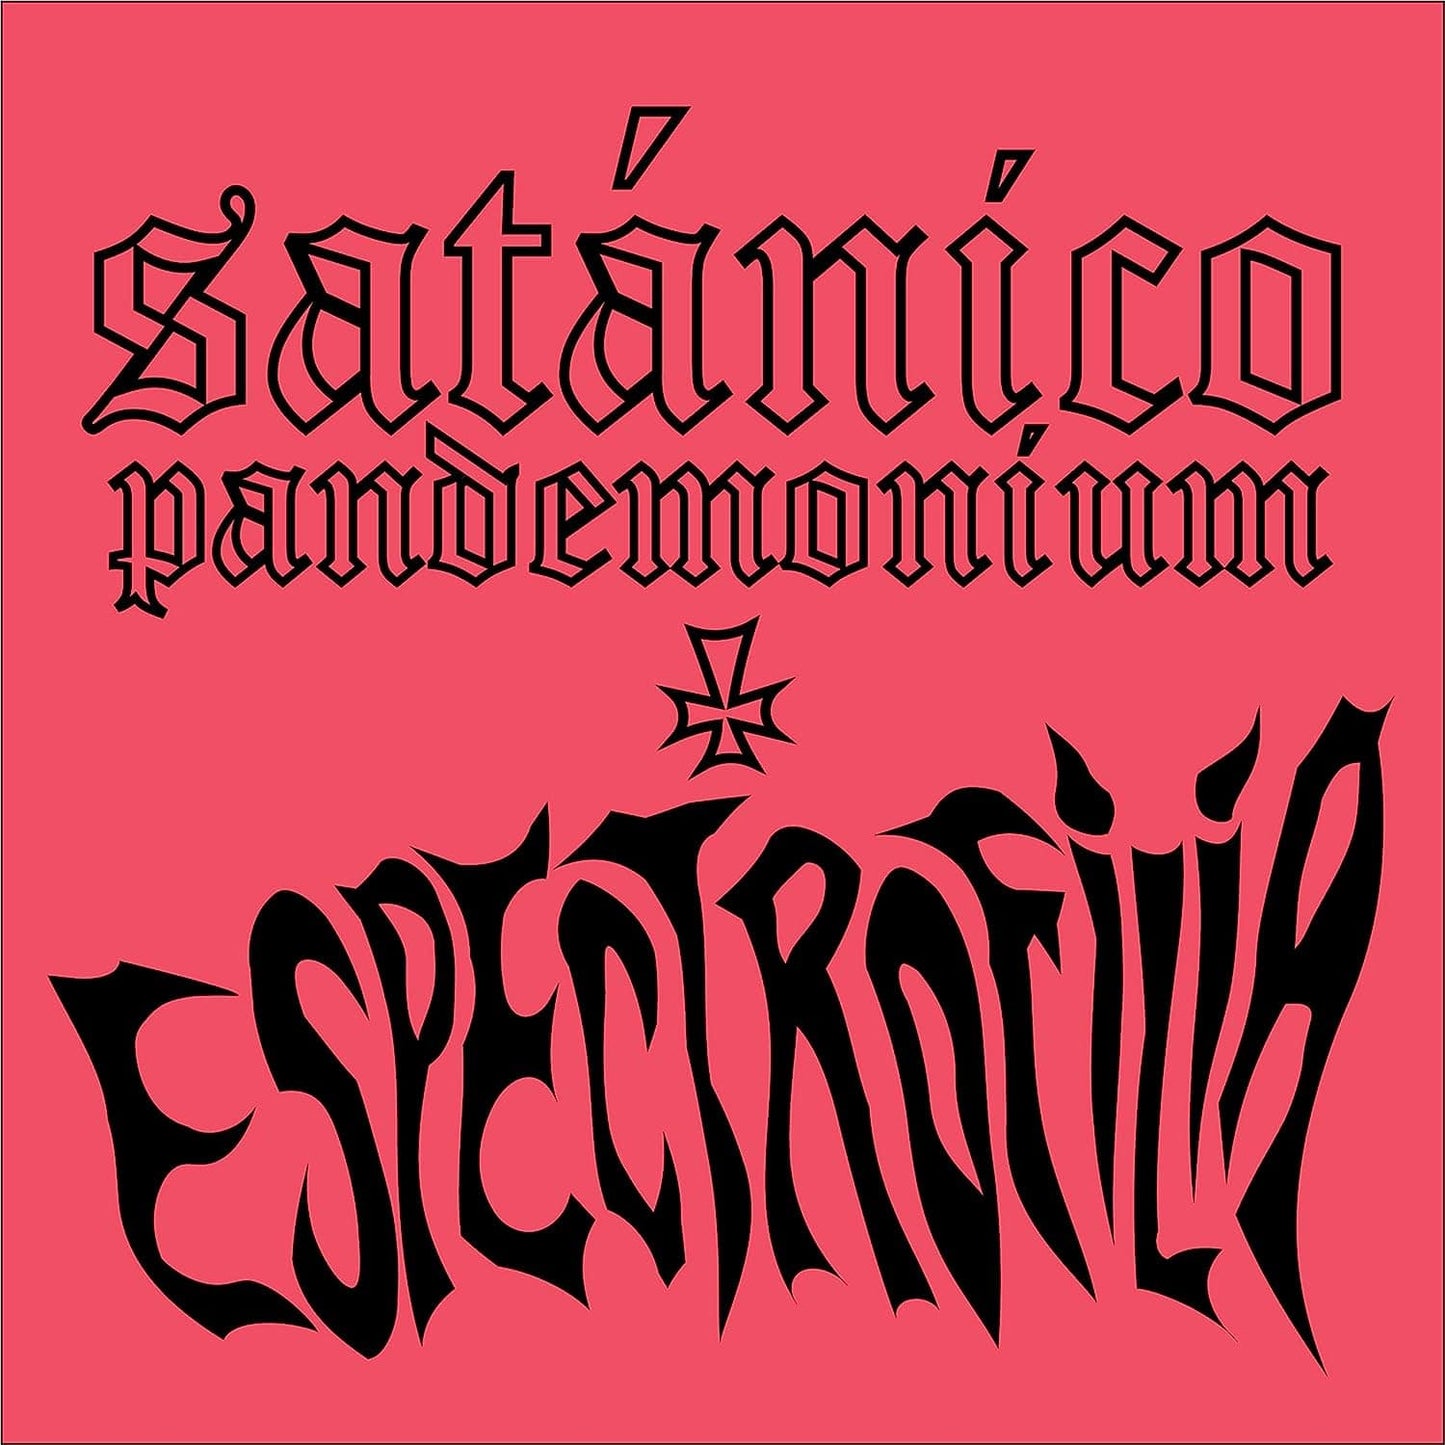 SATANICO PANDEMONIUM: Espectrofilia LP (Purple Vinyl)